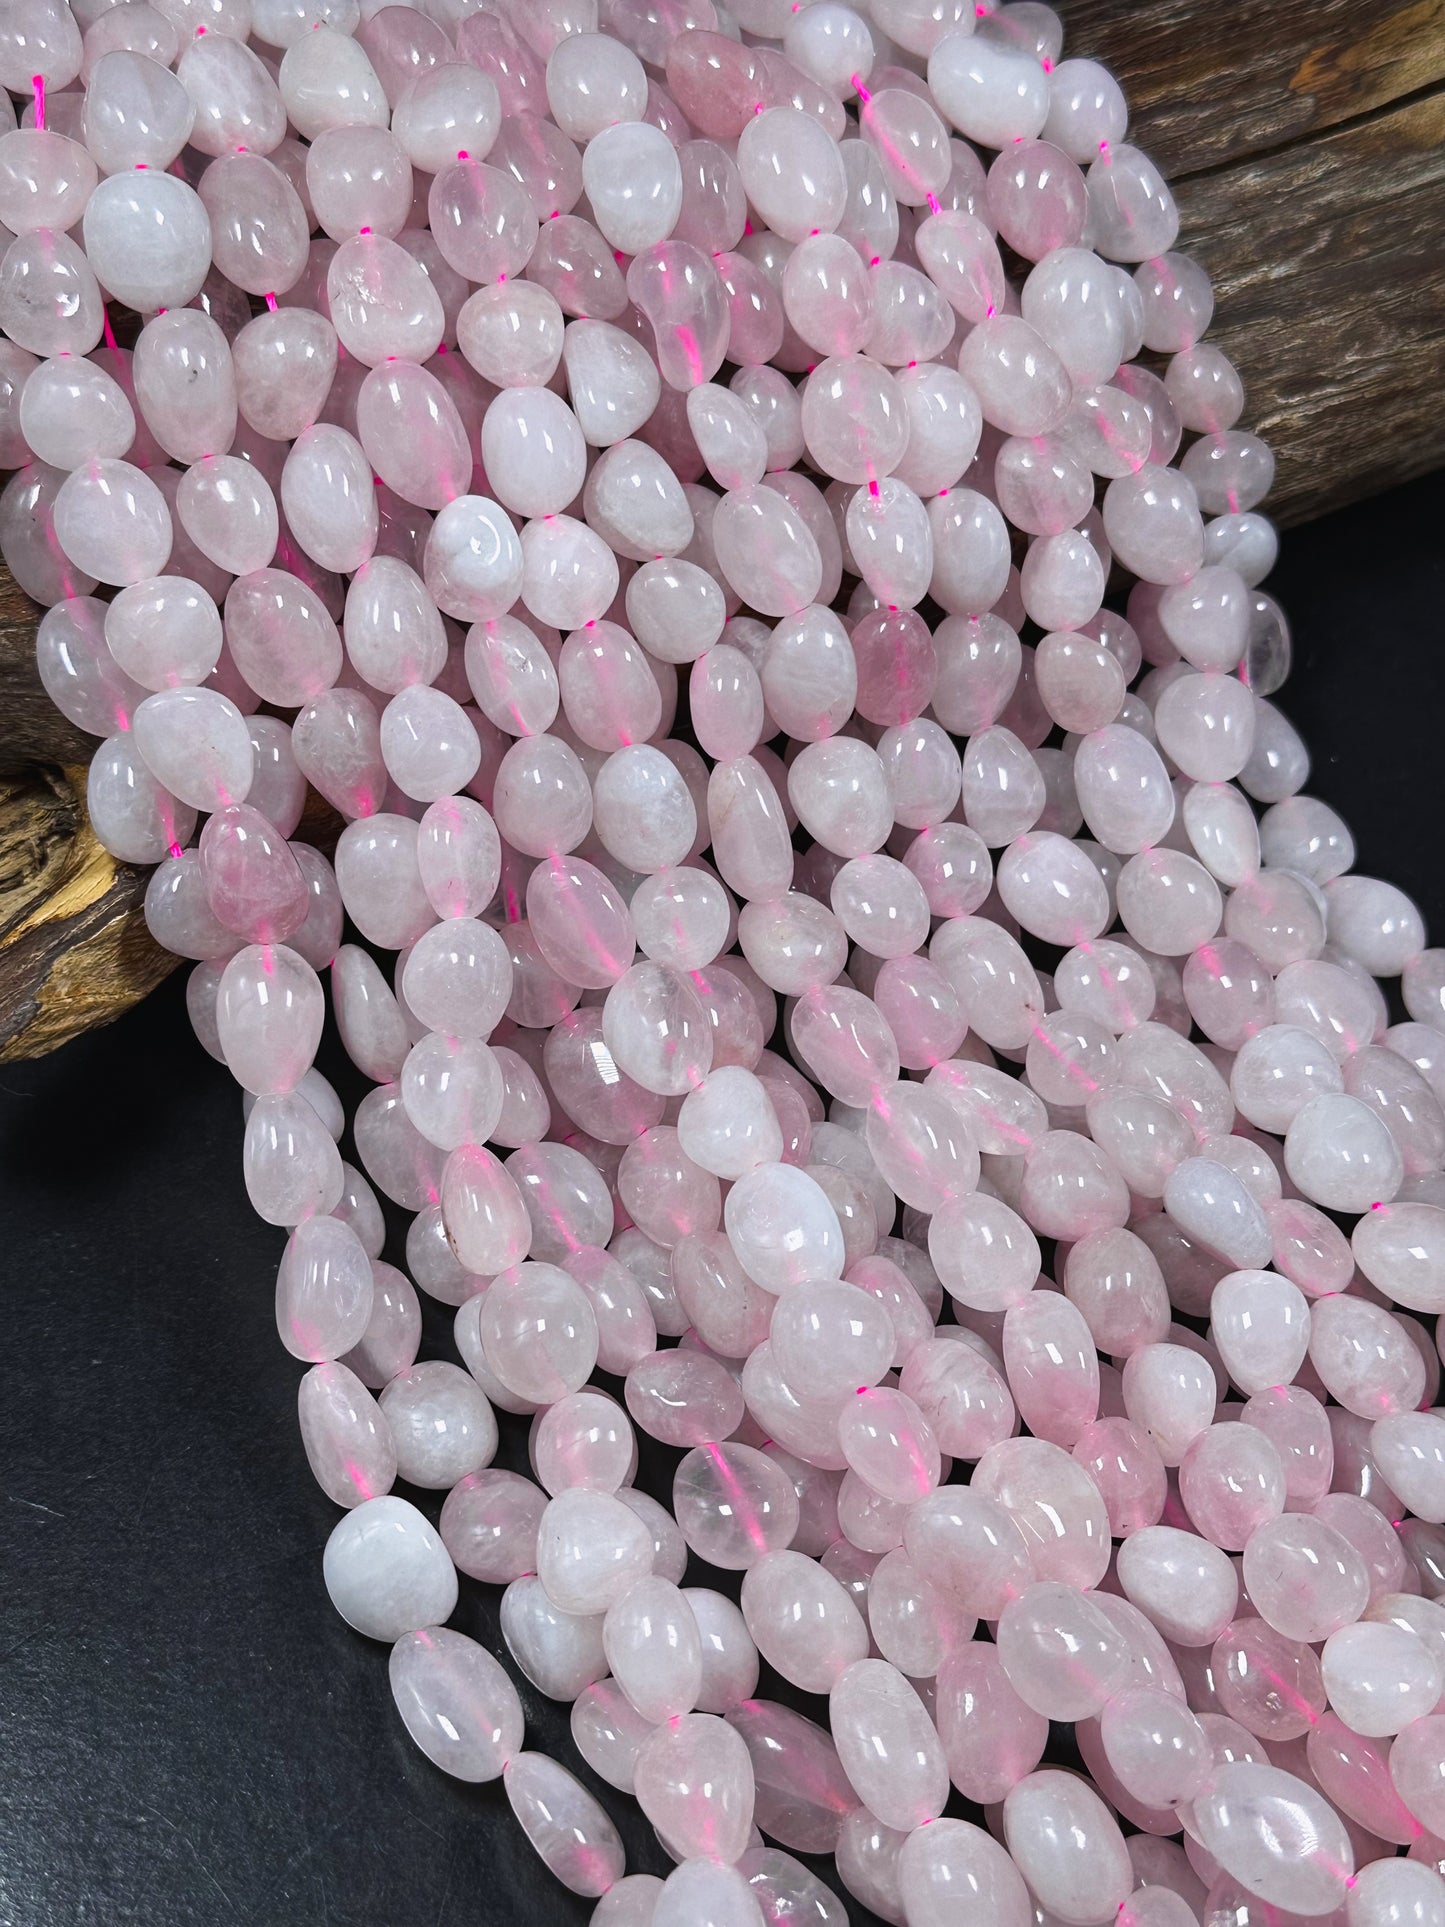 Natural Rose Quartz Gemstone Bead 10-15mm Freeform Pebble Shape, Beautiful Natural Pink Color Rose Quartz, Great Quality Full Strand 15.5"